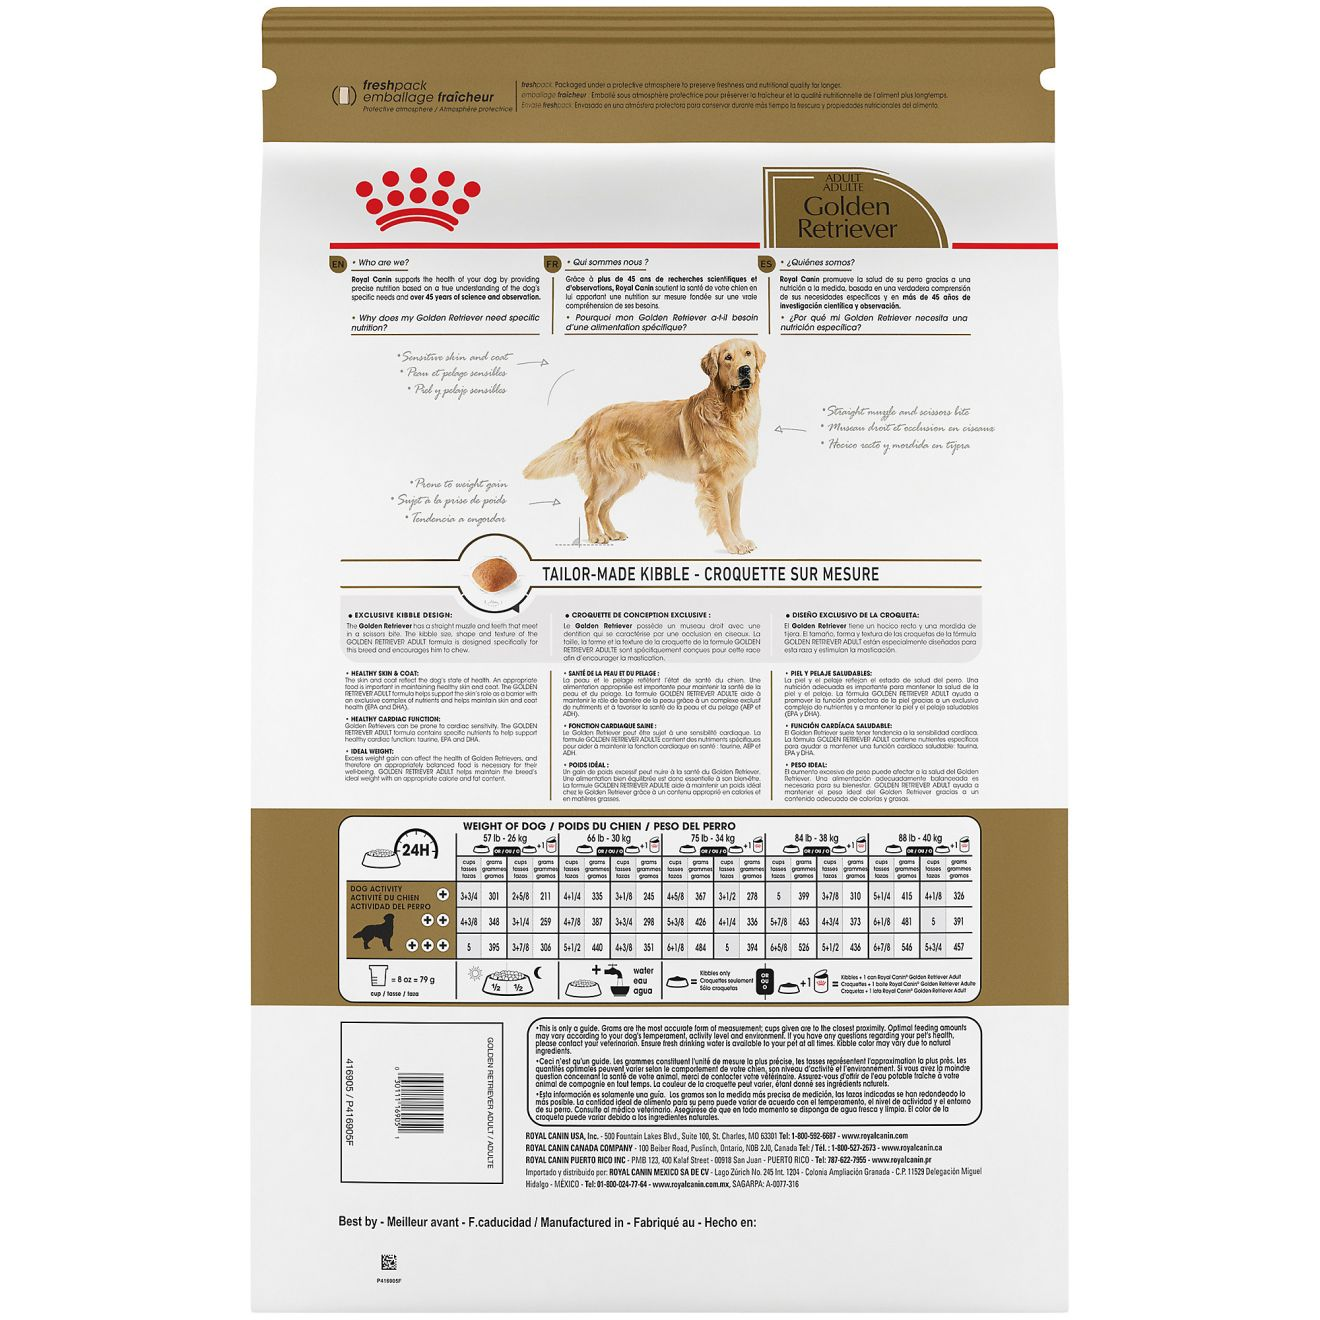 Golden Retriever Adult Dry Dog Food